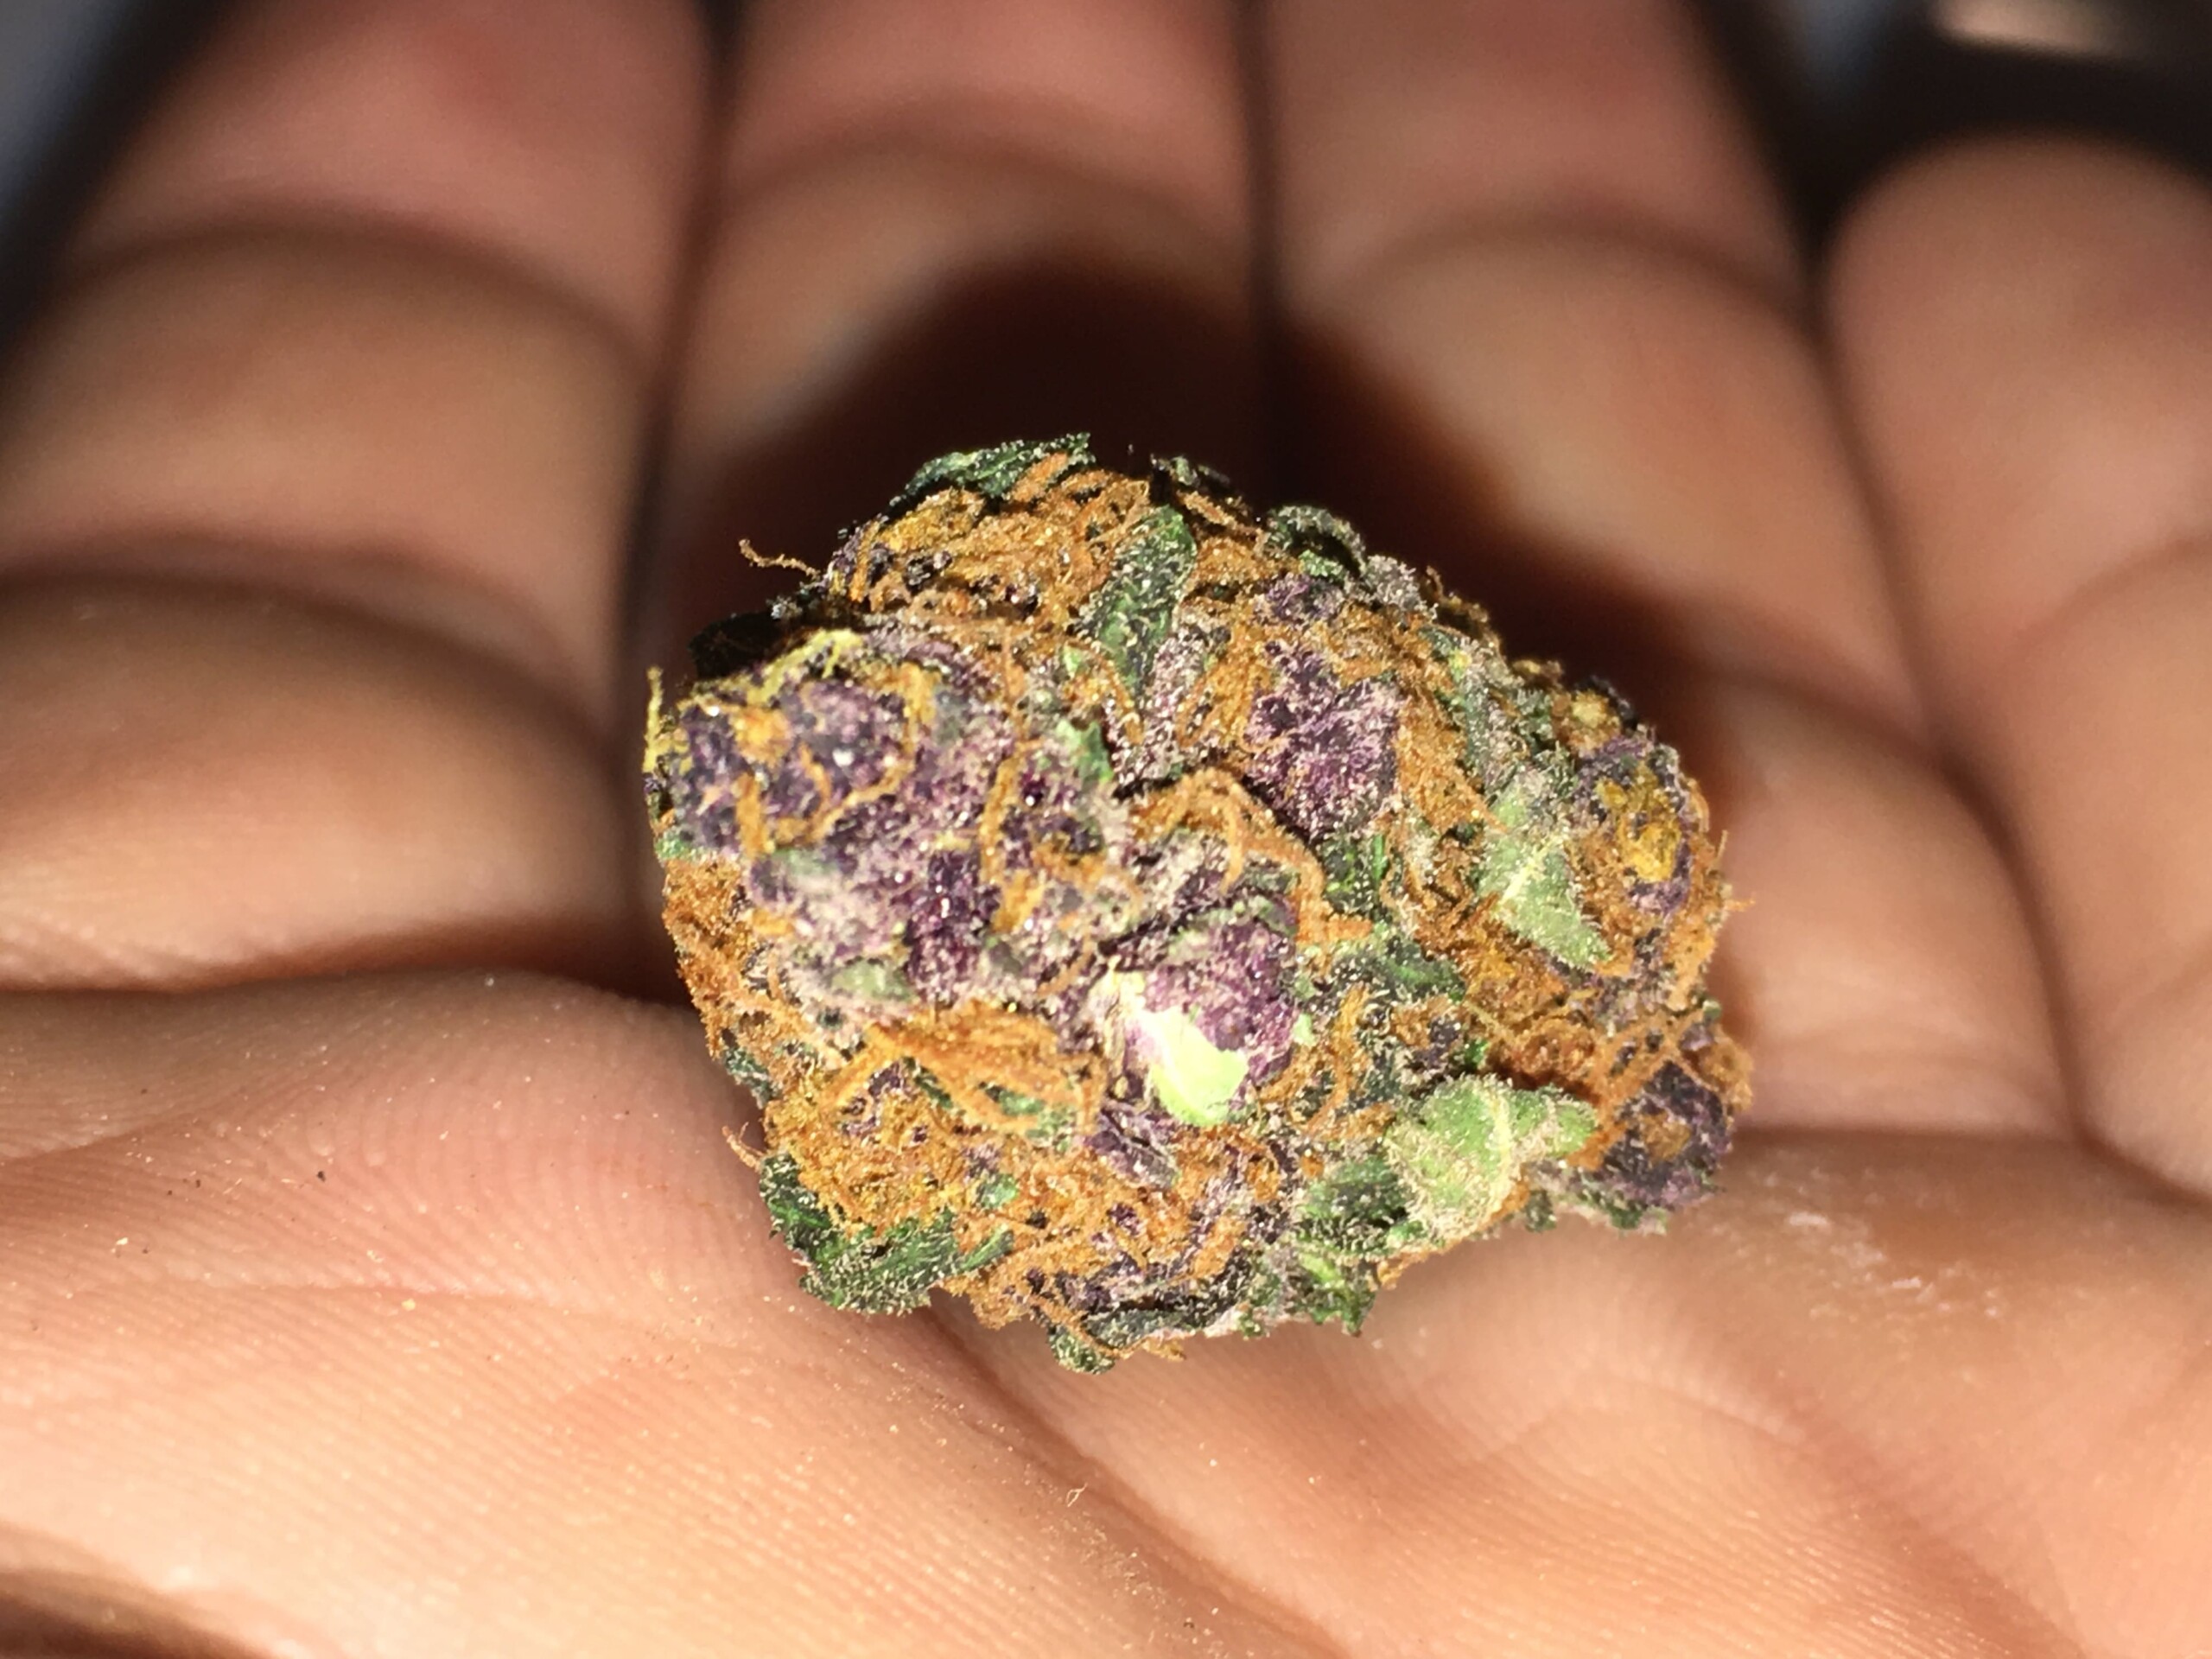 Fruity Pebbles cannabis bud